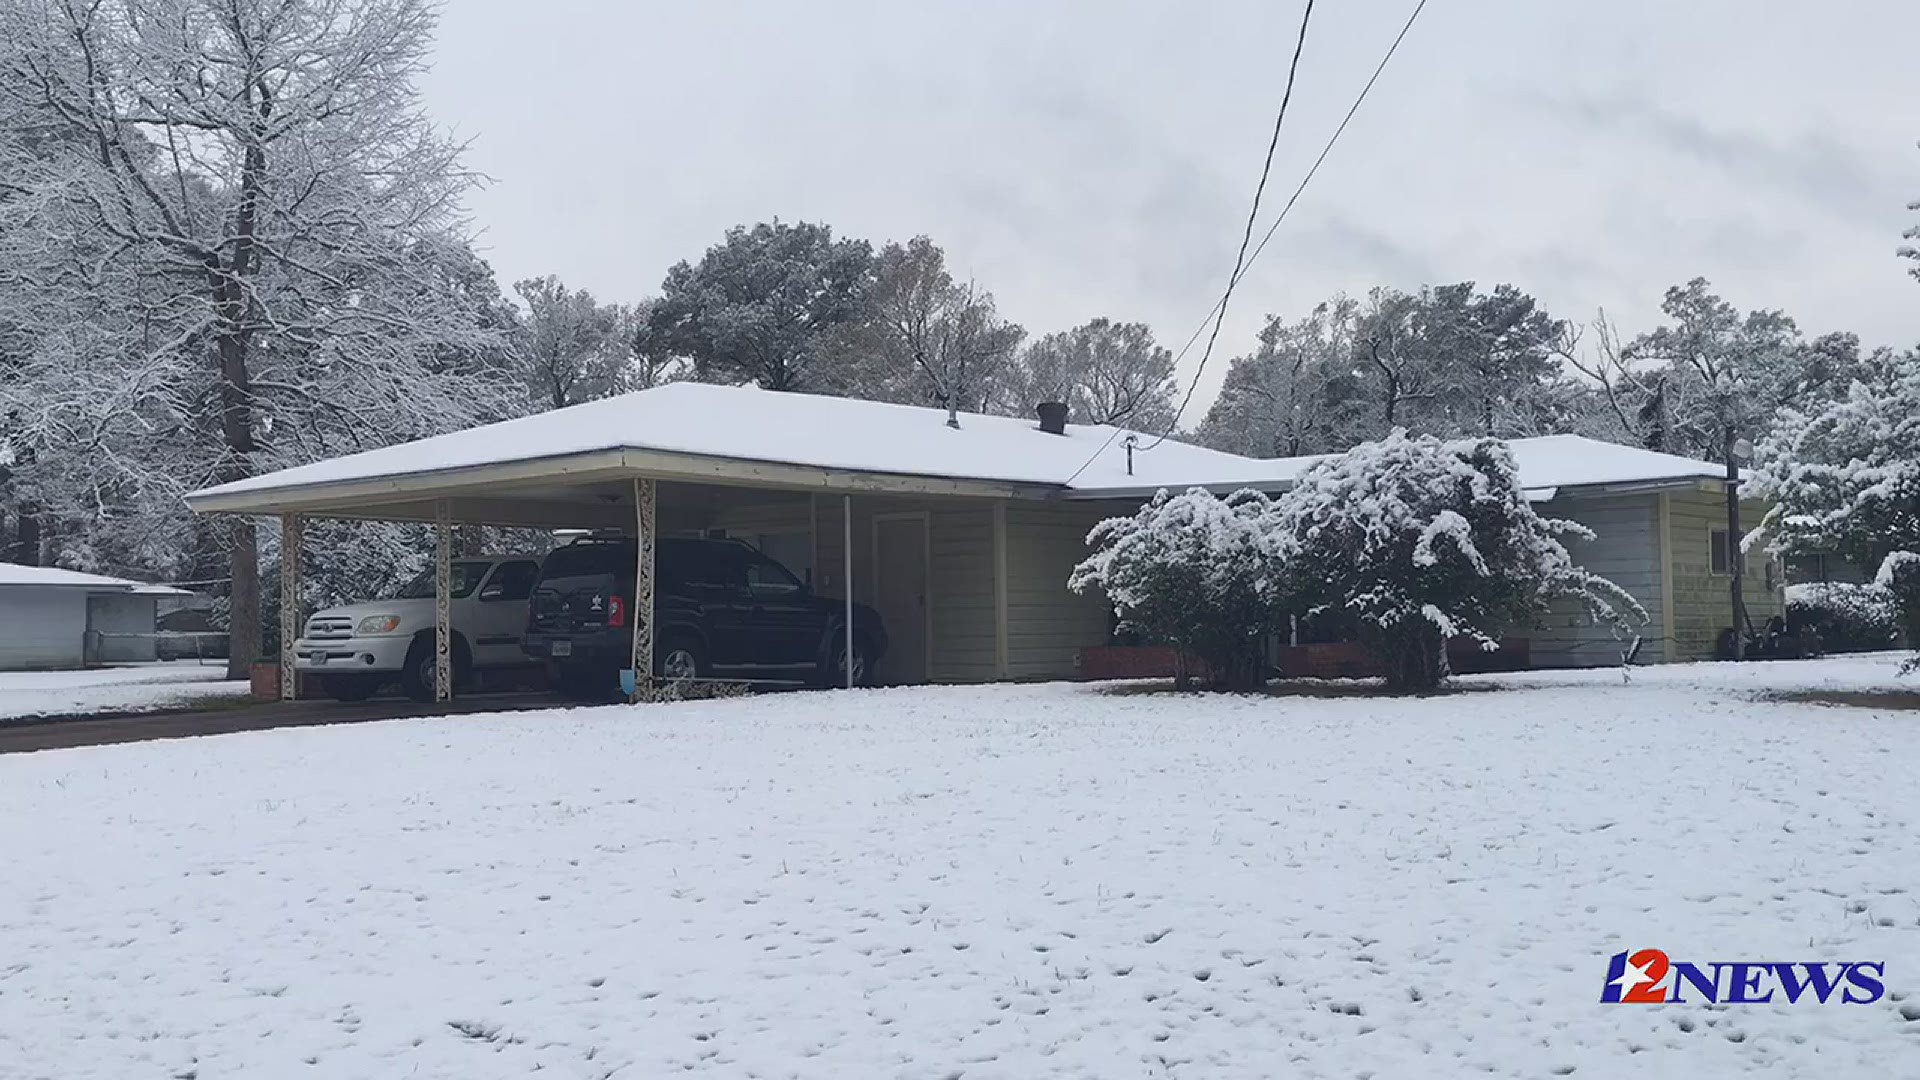 Snow fell across Southeast Texas three years ago today, Dec. 8, 2017.